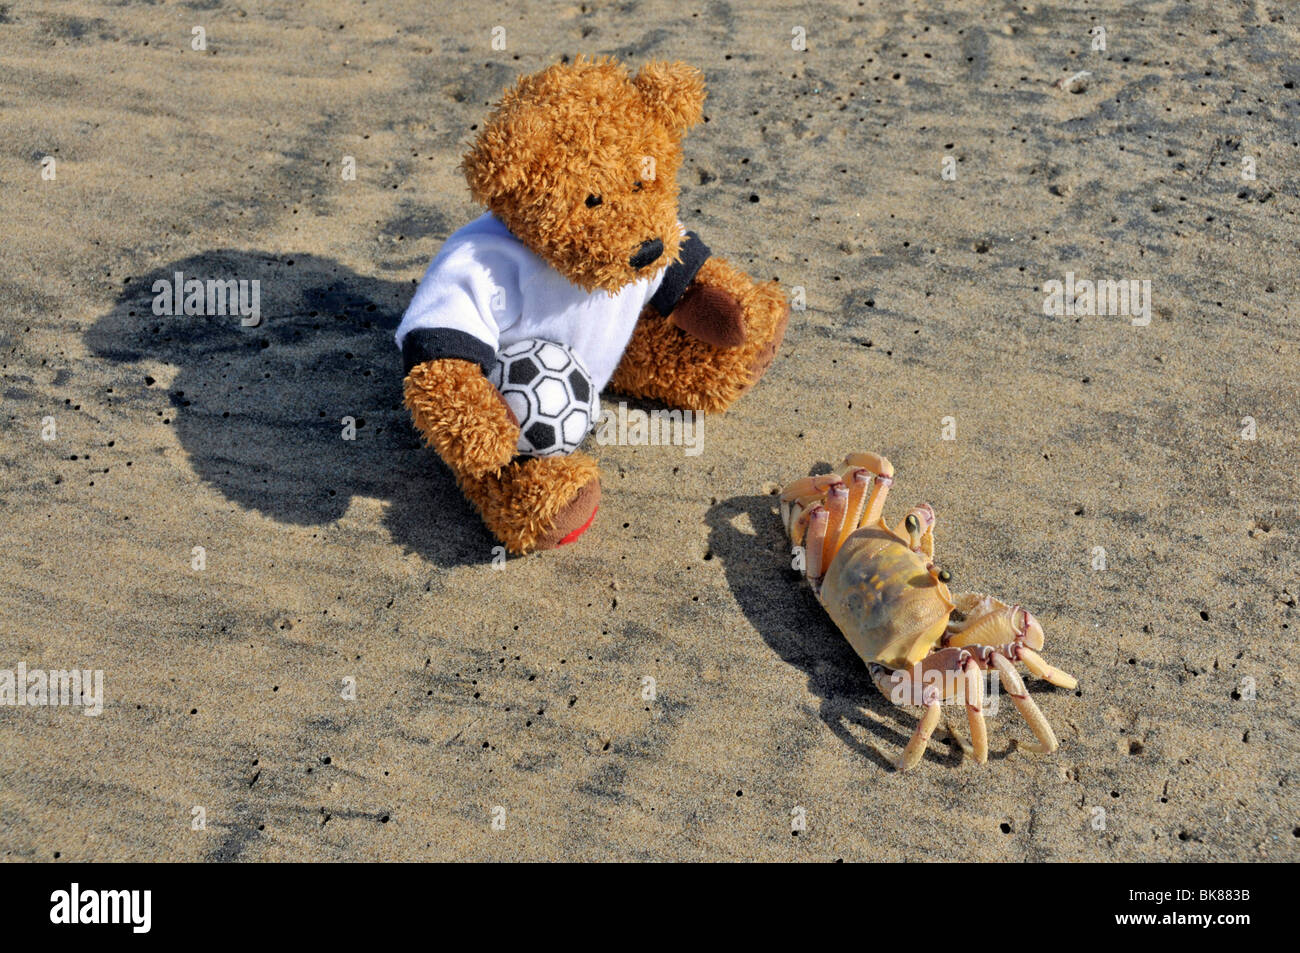 Teddy bear observing a Ghost Crab or Sand Crab (Ocypode sp.), Jabula Beach near Santa Lucia, KwaZulu-Natal province, South Afri Stock Photo